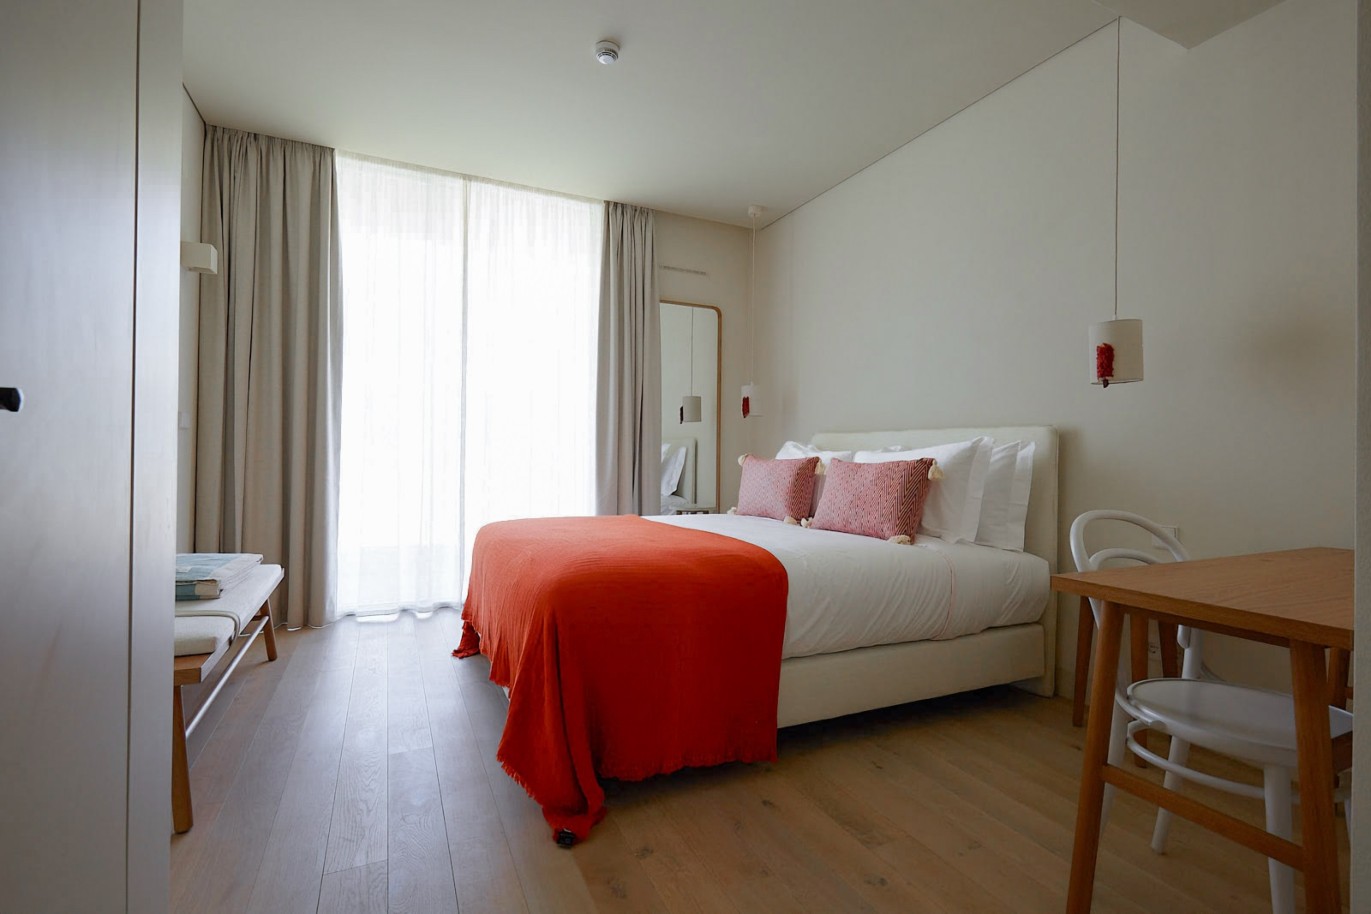 3 bedroom apartment in resort, for sale in Porches, Algarve_230736